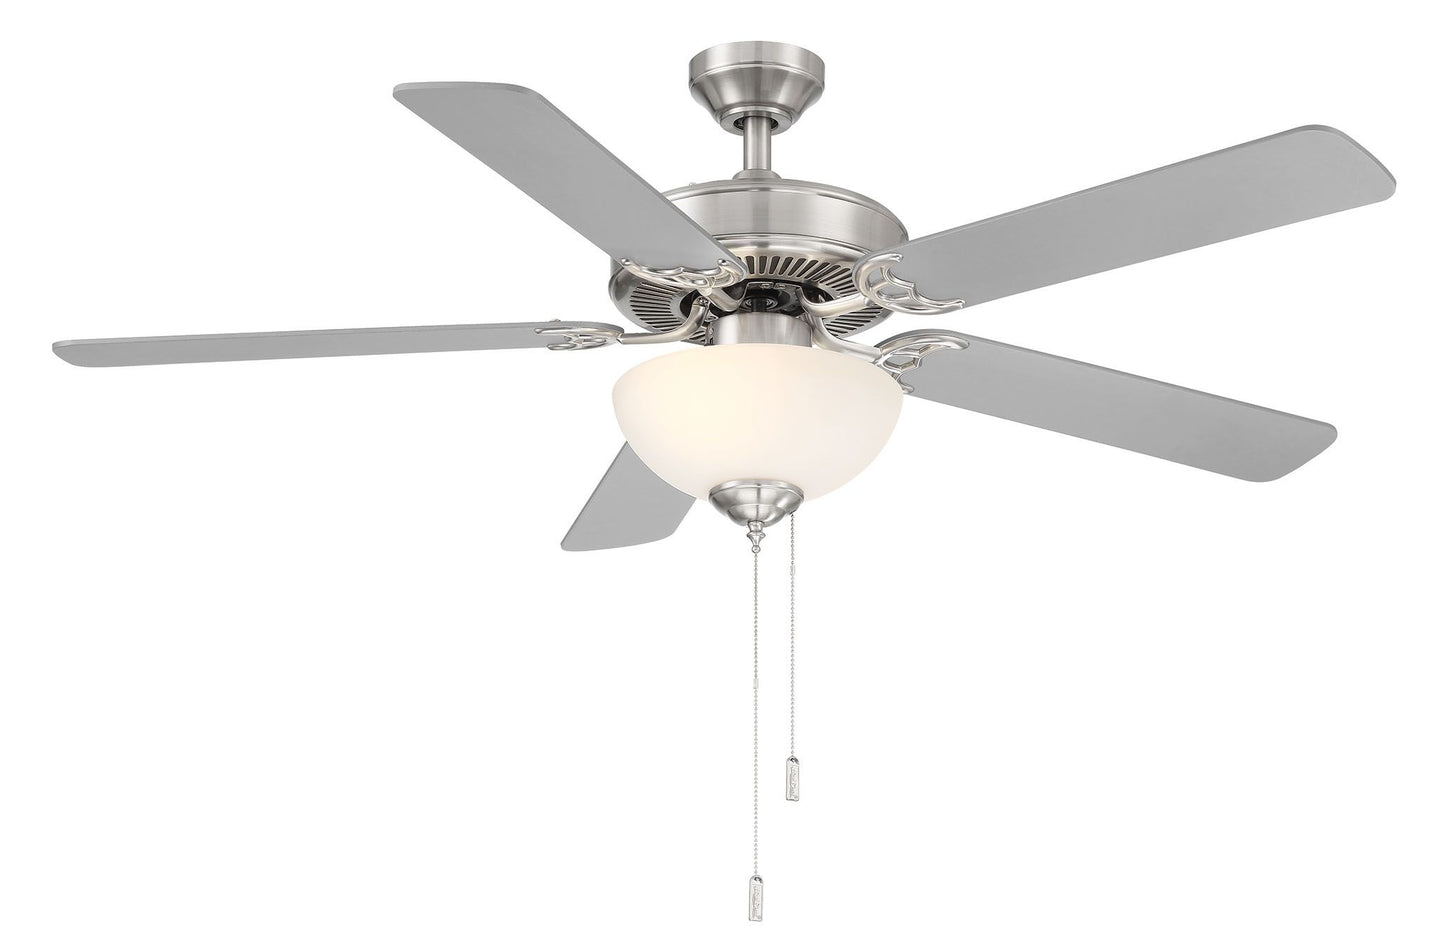 Wind River Fans Dalton 52 Inch Indoor/Outdoor Ceiling Fan, 3 Speed, 120V